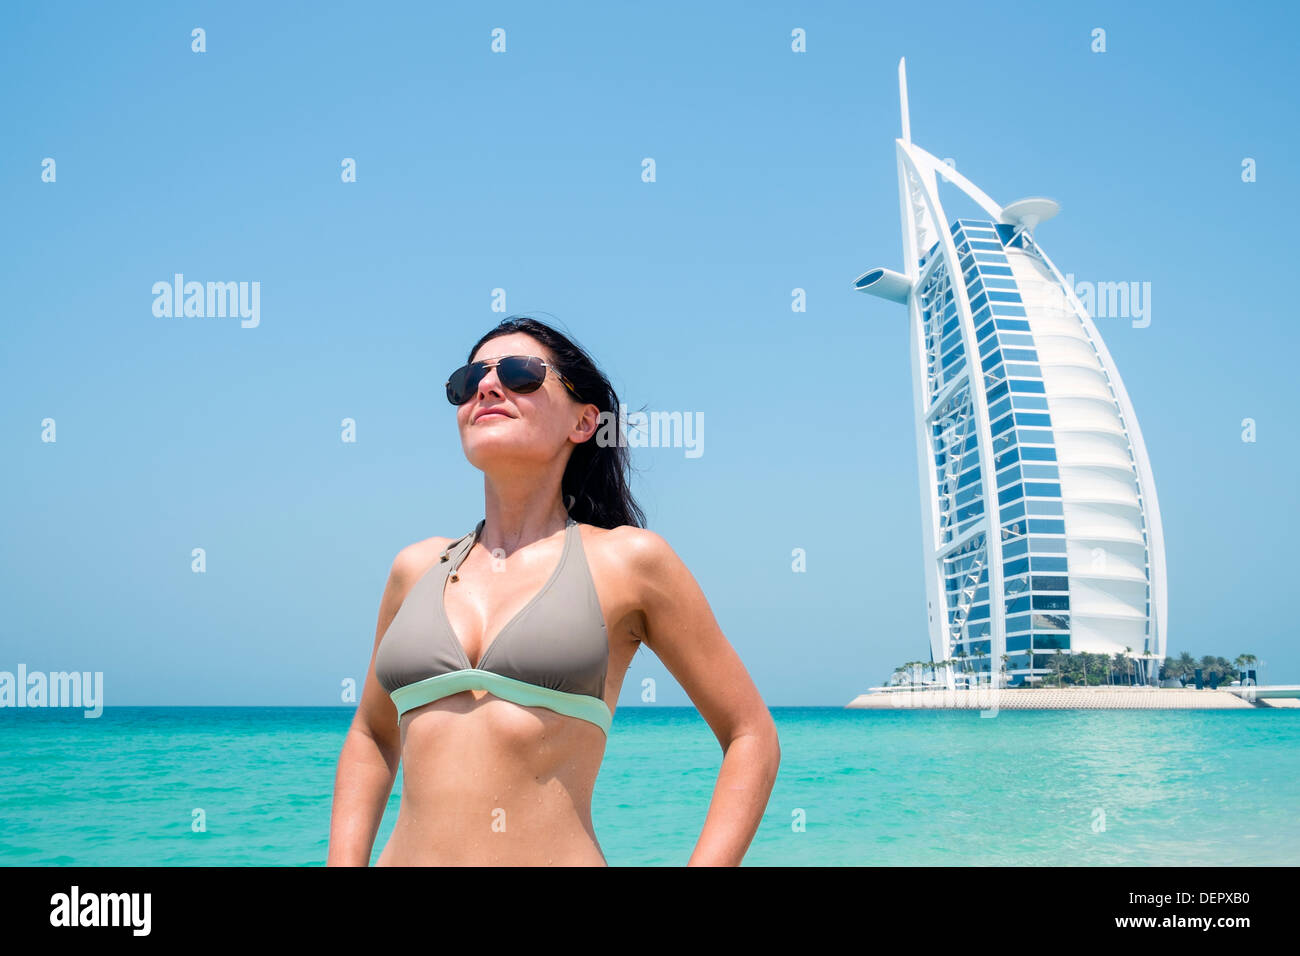 Burj Al Arab luxury hotel in Dubai United Arab Emirates Stock Photo